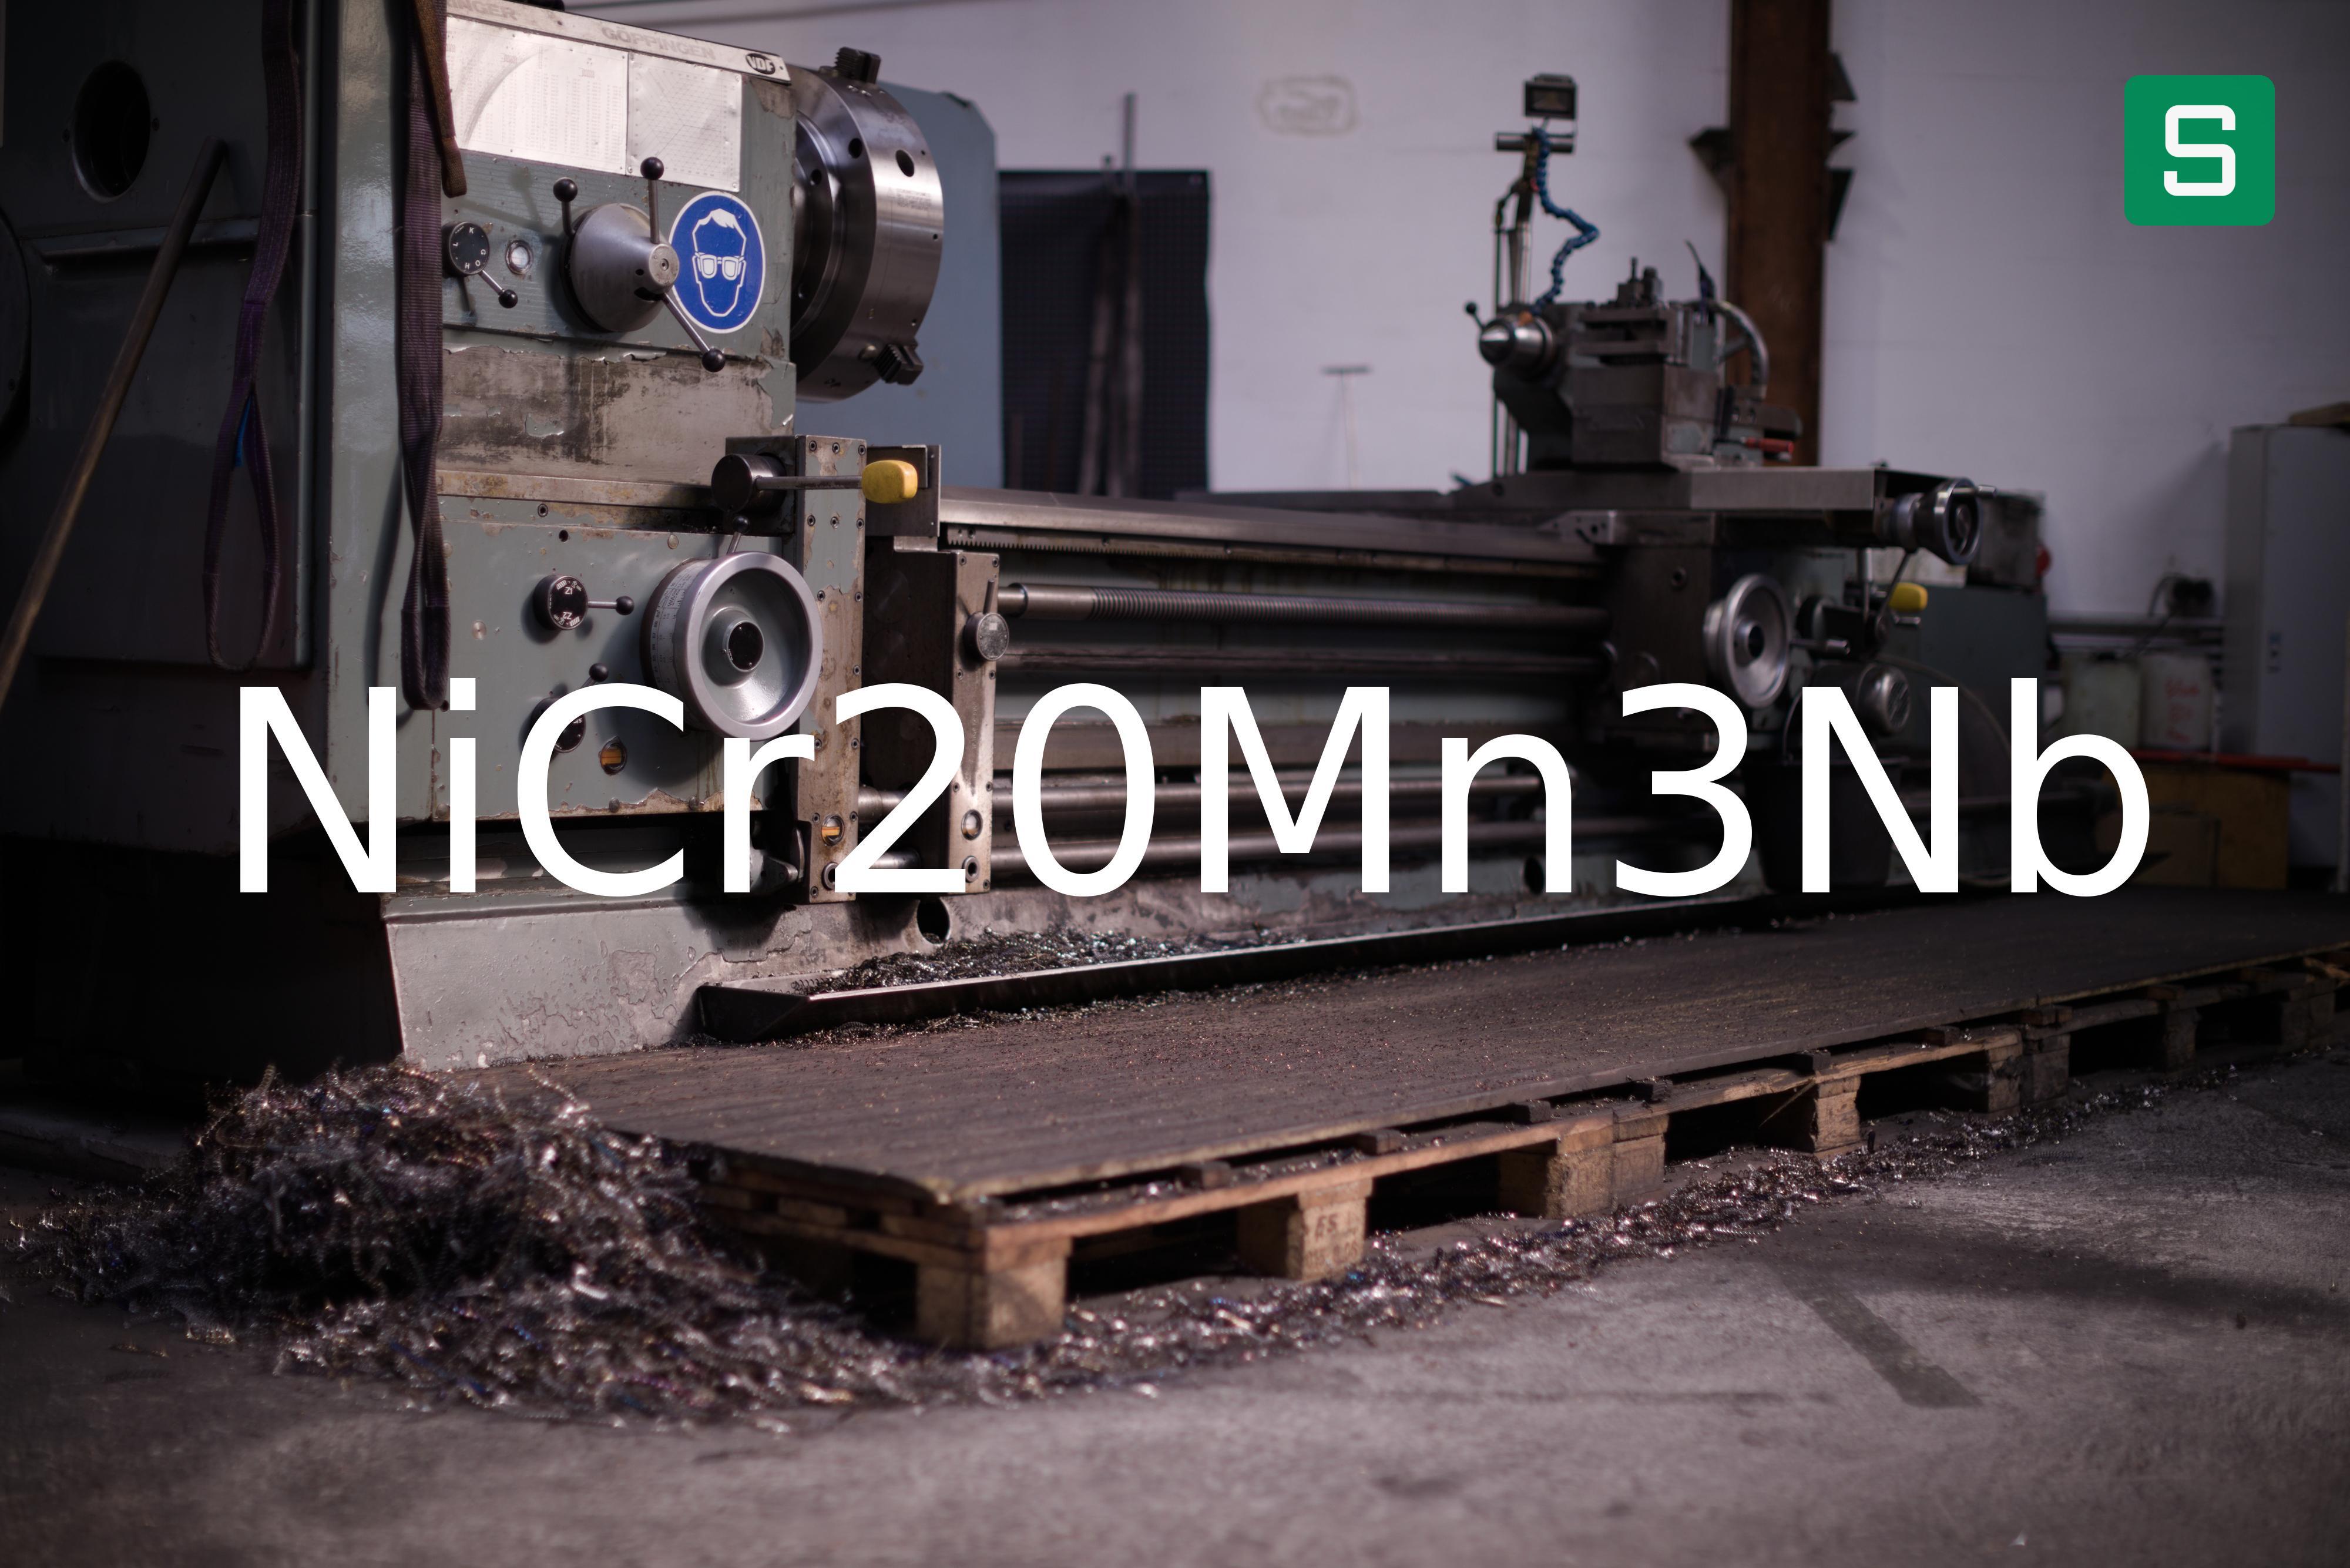 Stahlwerkstoff: NiCr20Mn3Nb